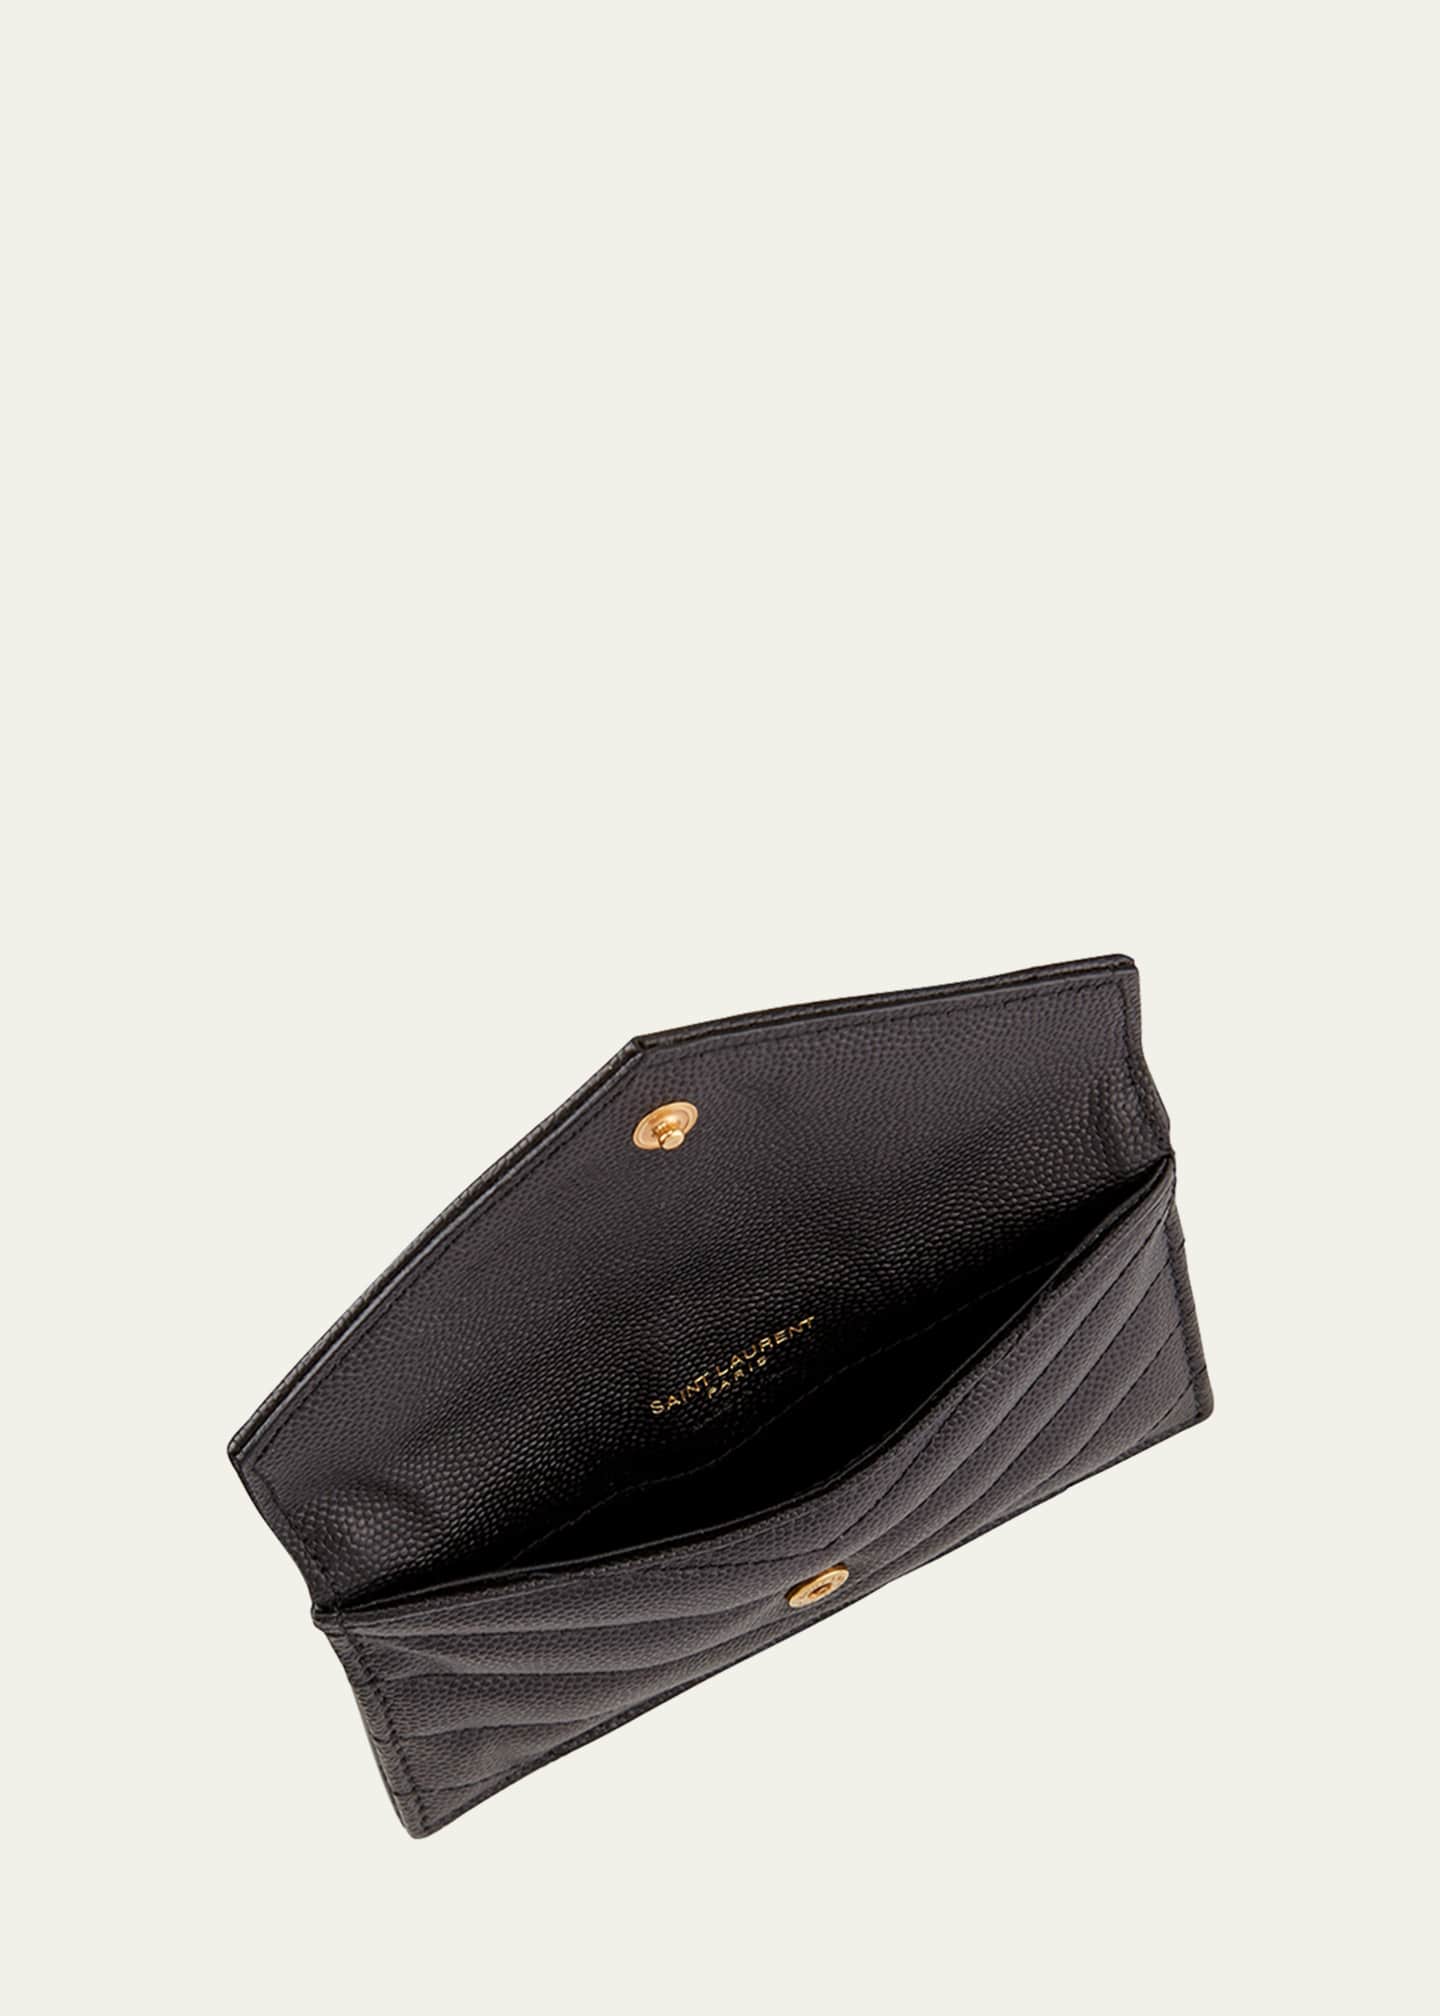 Saint Laurent Ysl Small Grain de Poudre Envelope Wallet, Dark Beige, Women's, Small Leather Goods Wallets